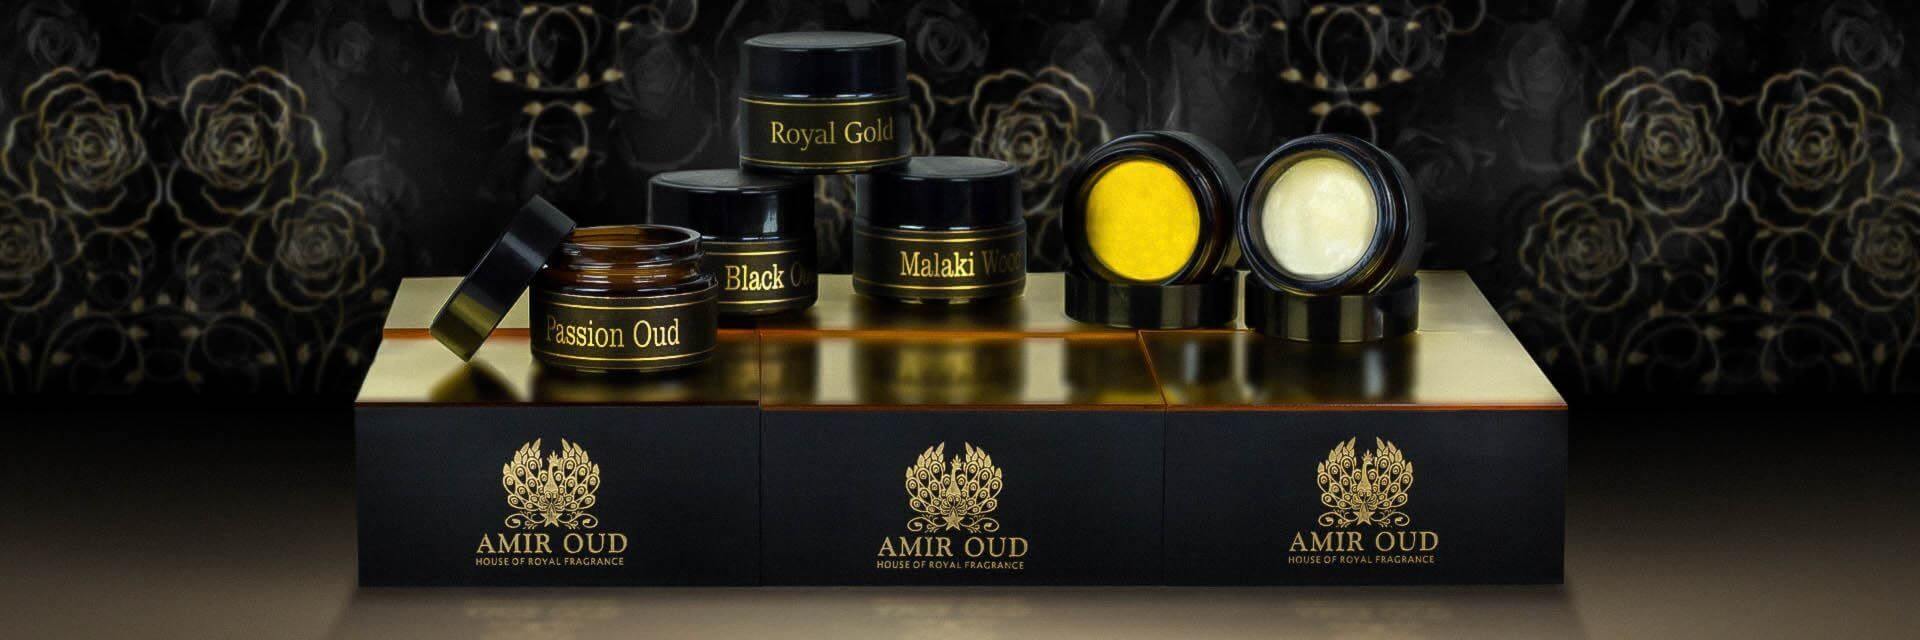 Royal Solid Perfume Jars